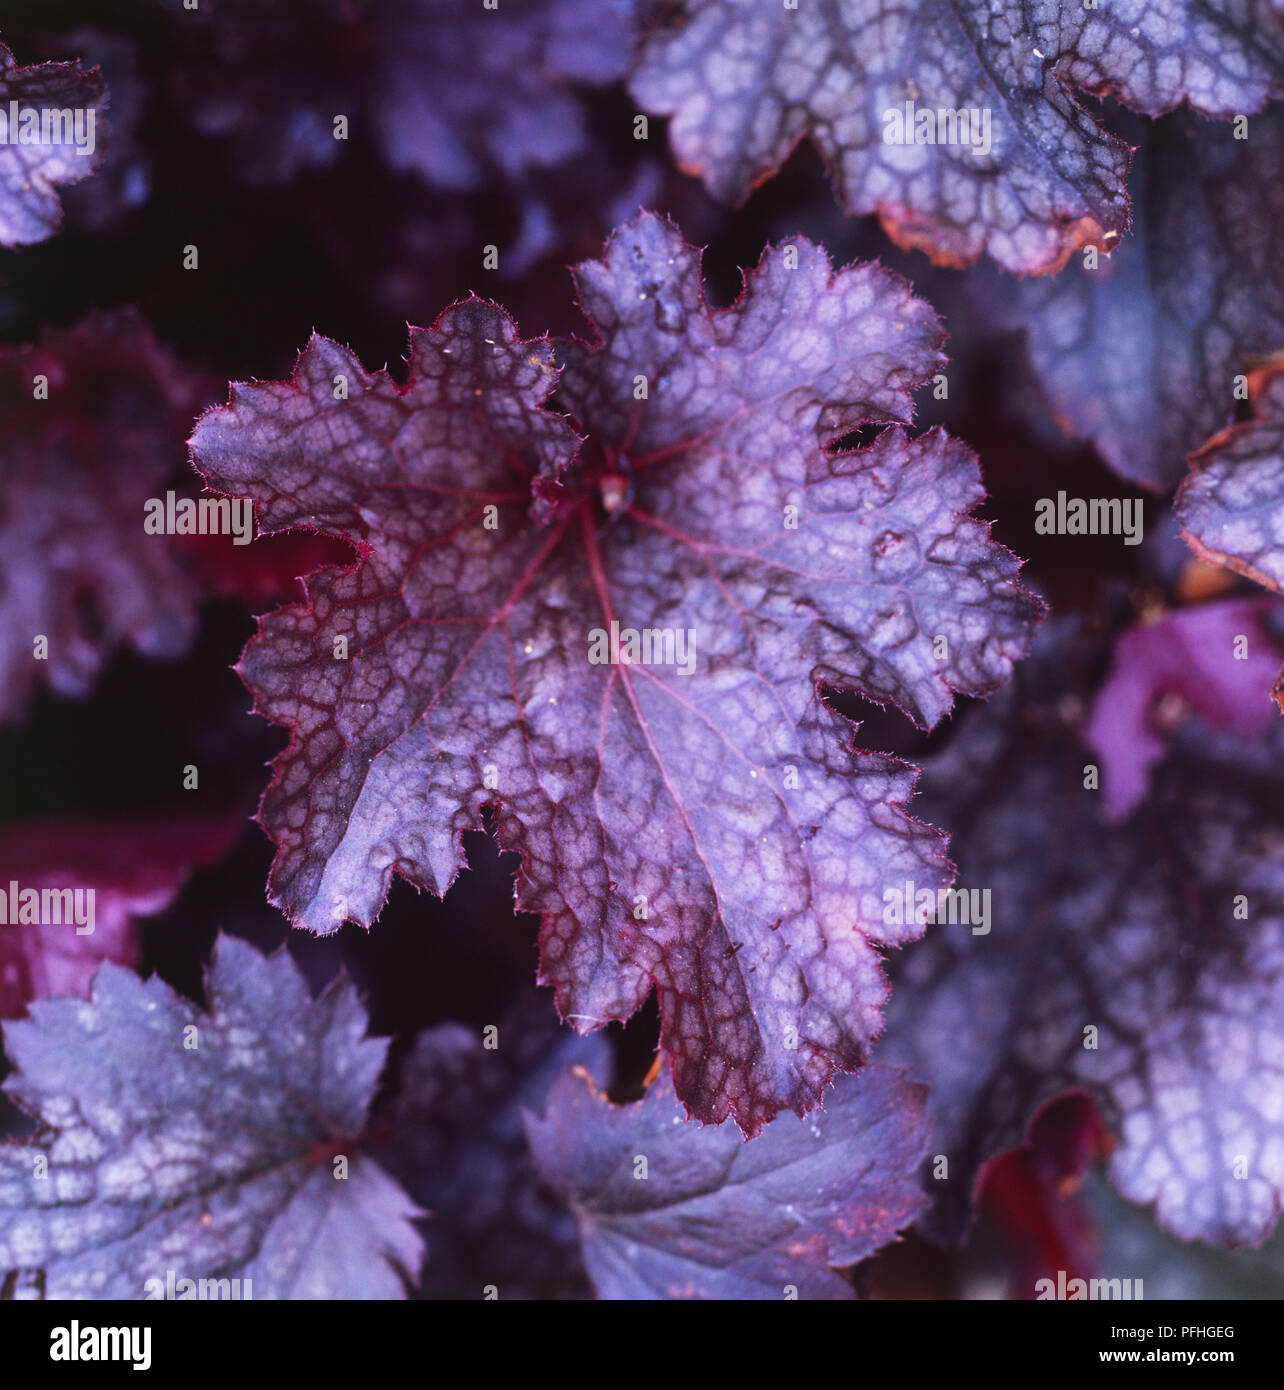 Heuchera 'Plum Pudding' close up of purple leaves. Stock Photo